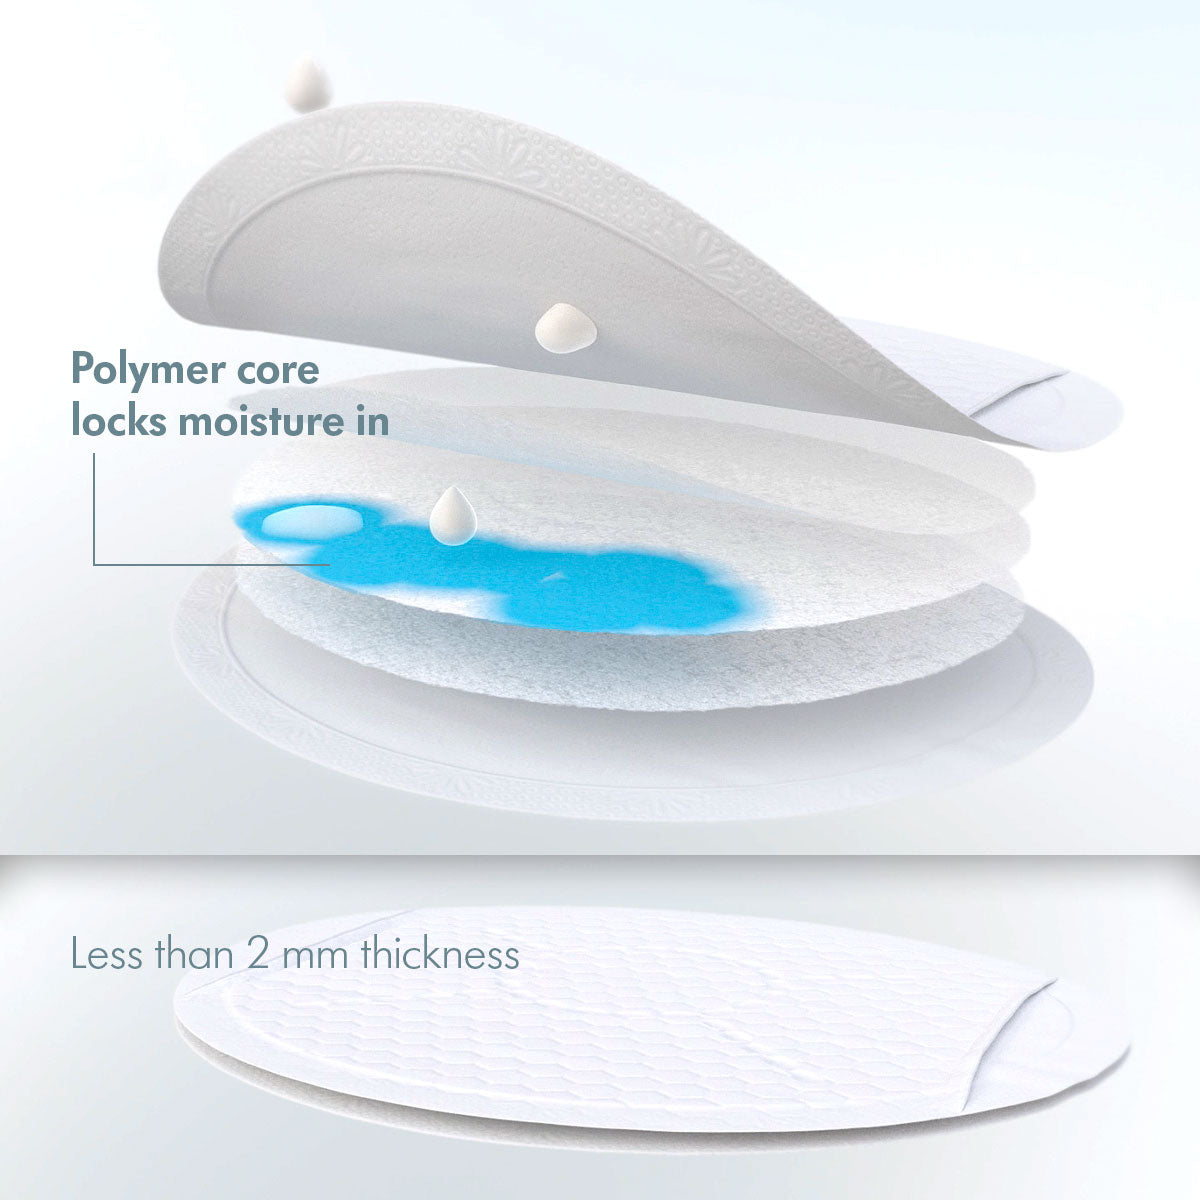 Safe & Dry™ Ultra Thin Disposable Nursing Pads 30pcs